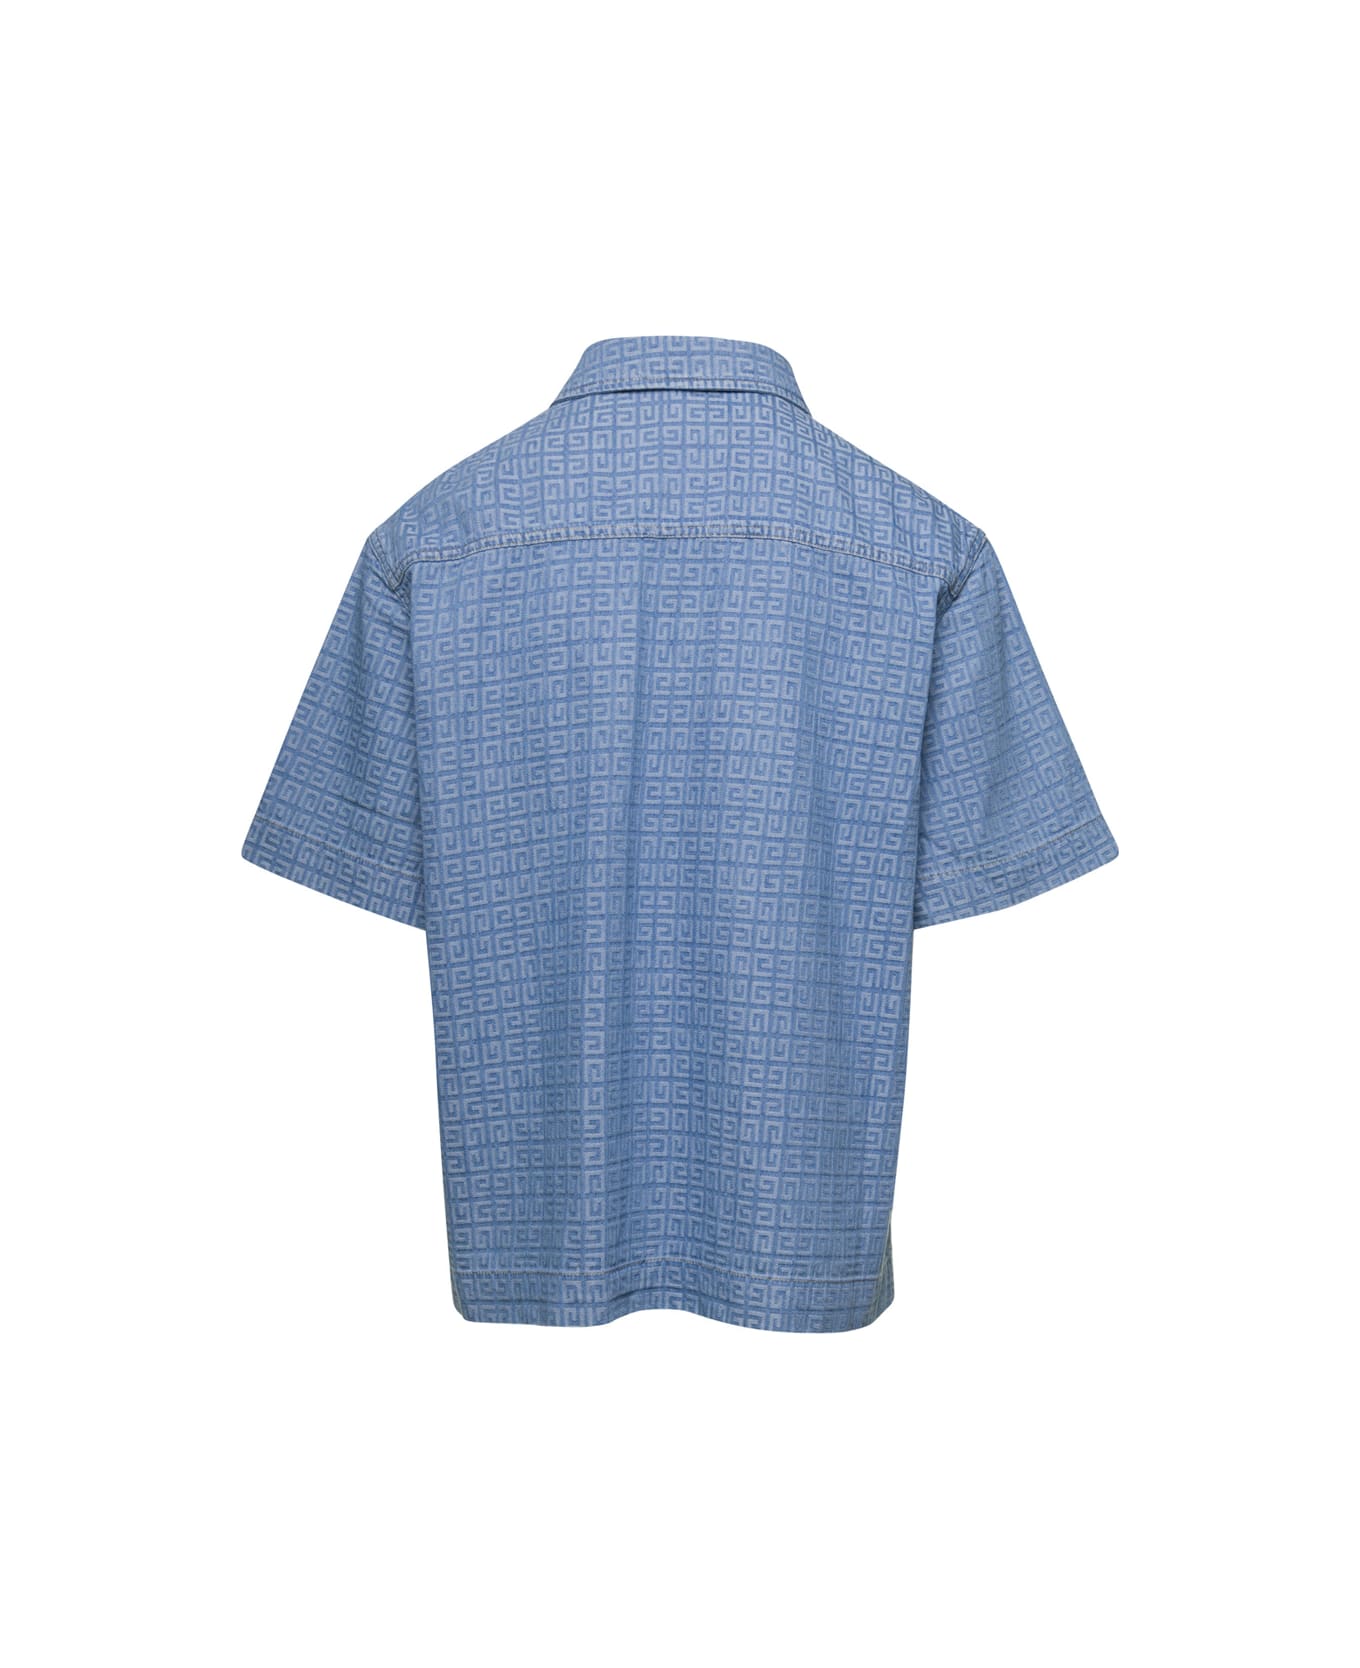 Givenchy Short Sleeves Boxy Fit Denim Shirt - LIGHT BLUE